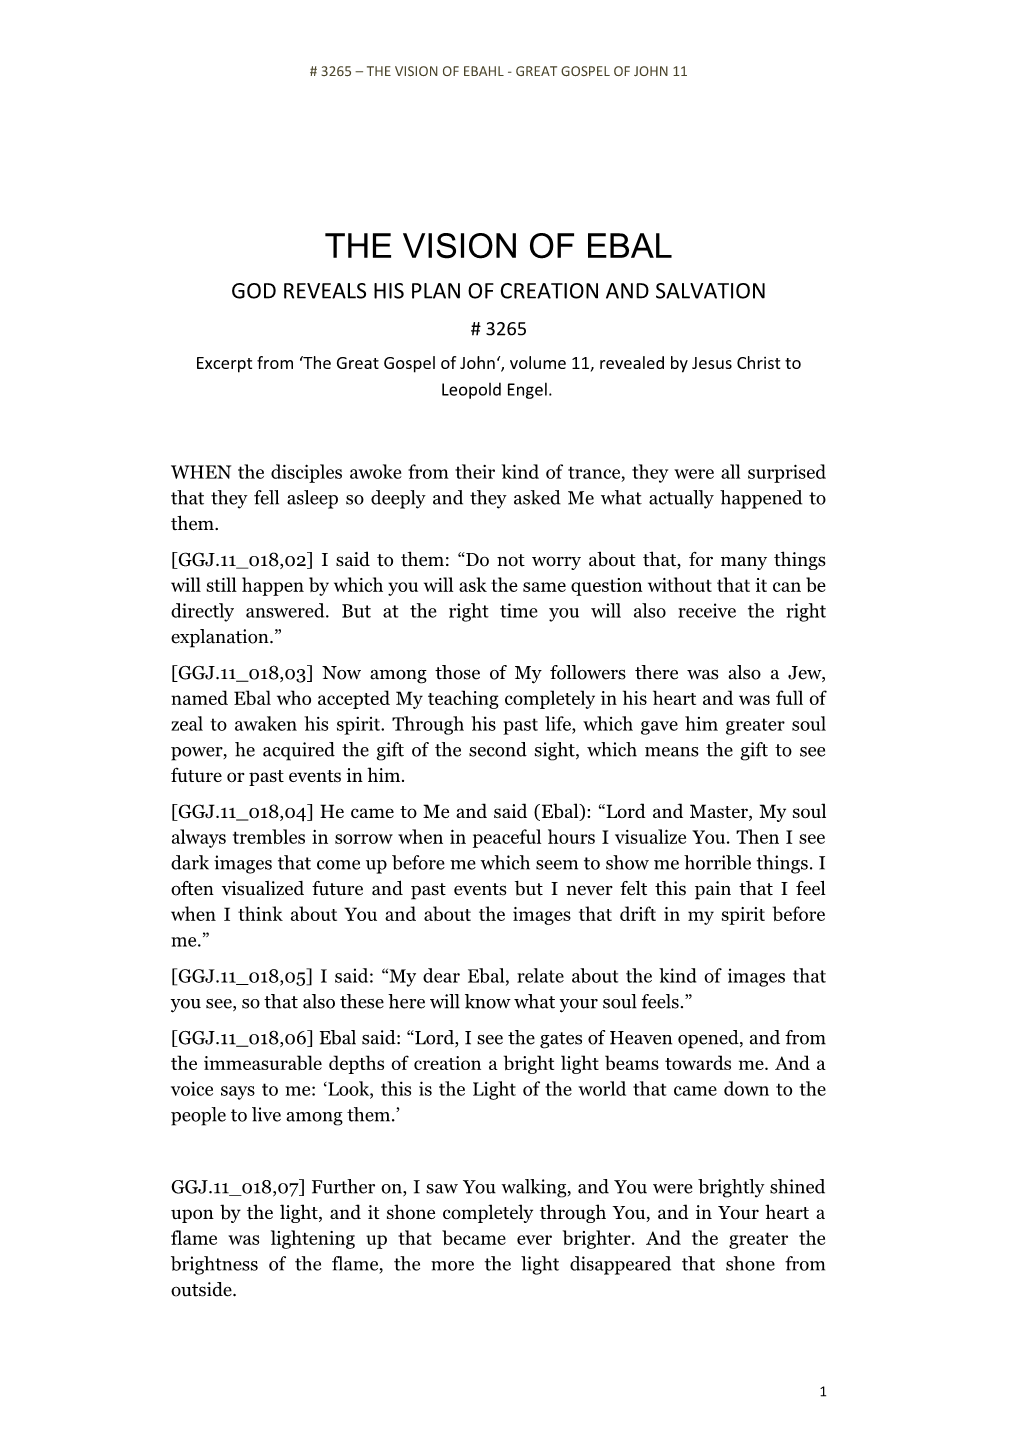 3265 the VISION of EBAHL - Great Gospel of John 11